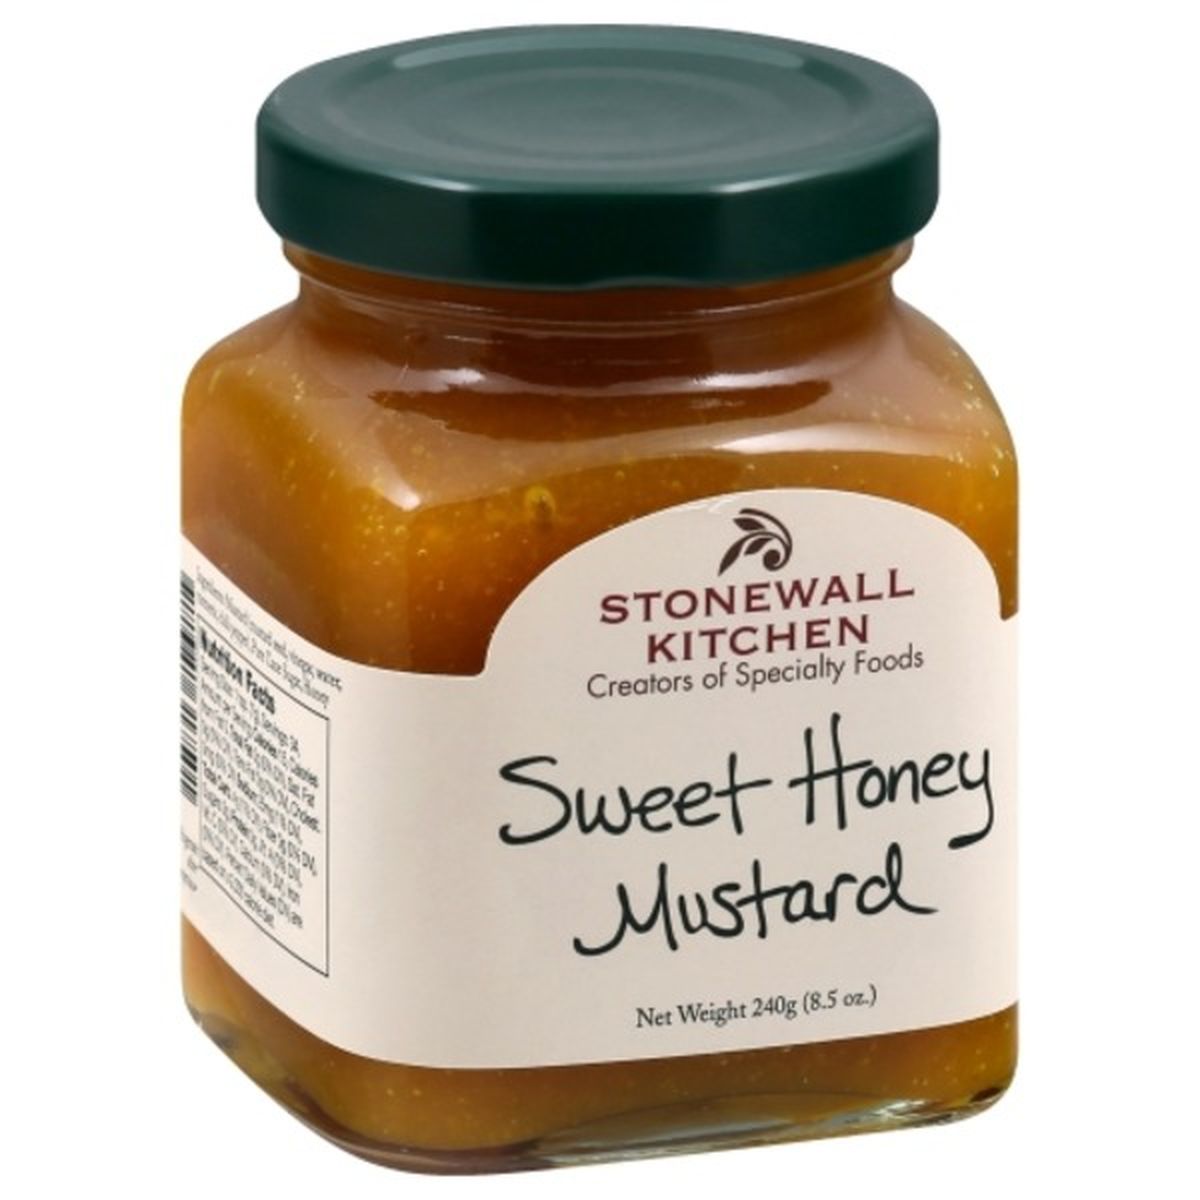 Calories in Stonewall Kitchen Mustard, Sweet Honey